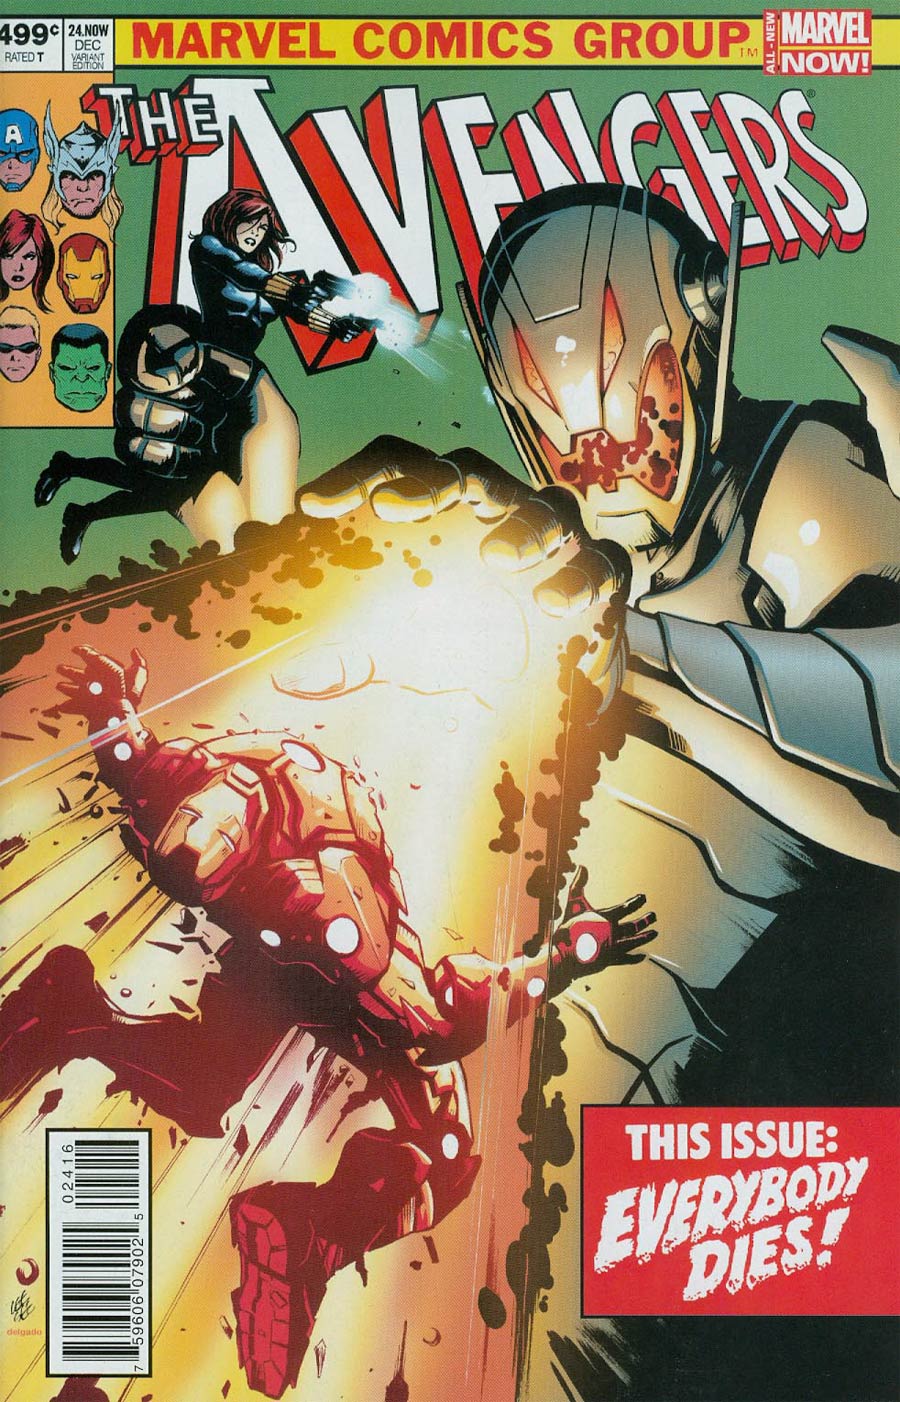 Avengers Vol 5 #24.NOW Cover L Variant Avengers Covers X-Men By Lee Garbett Cover